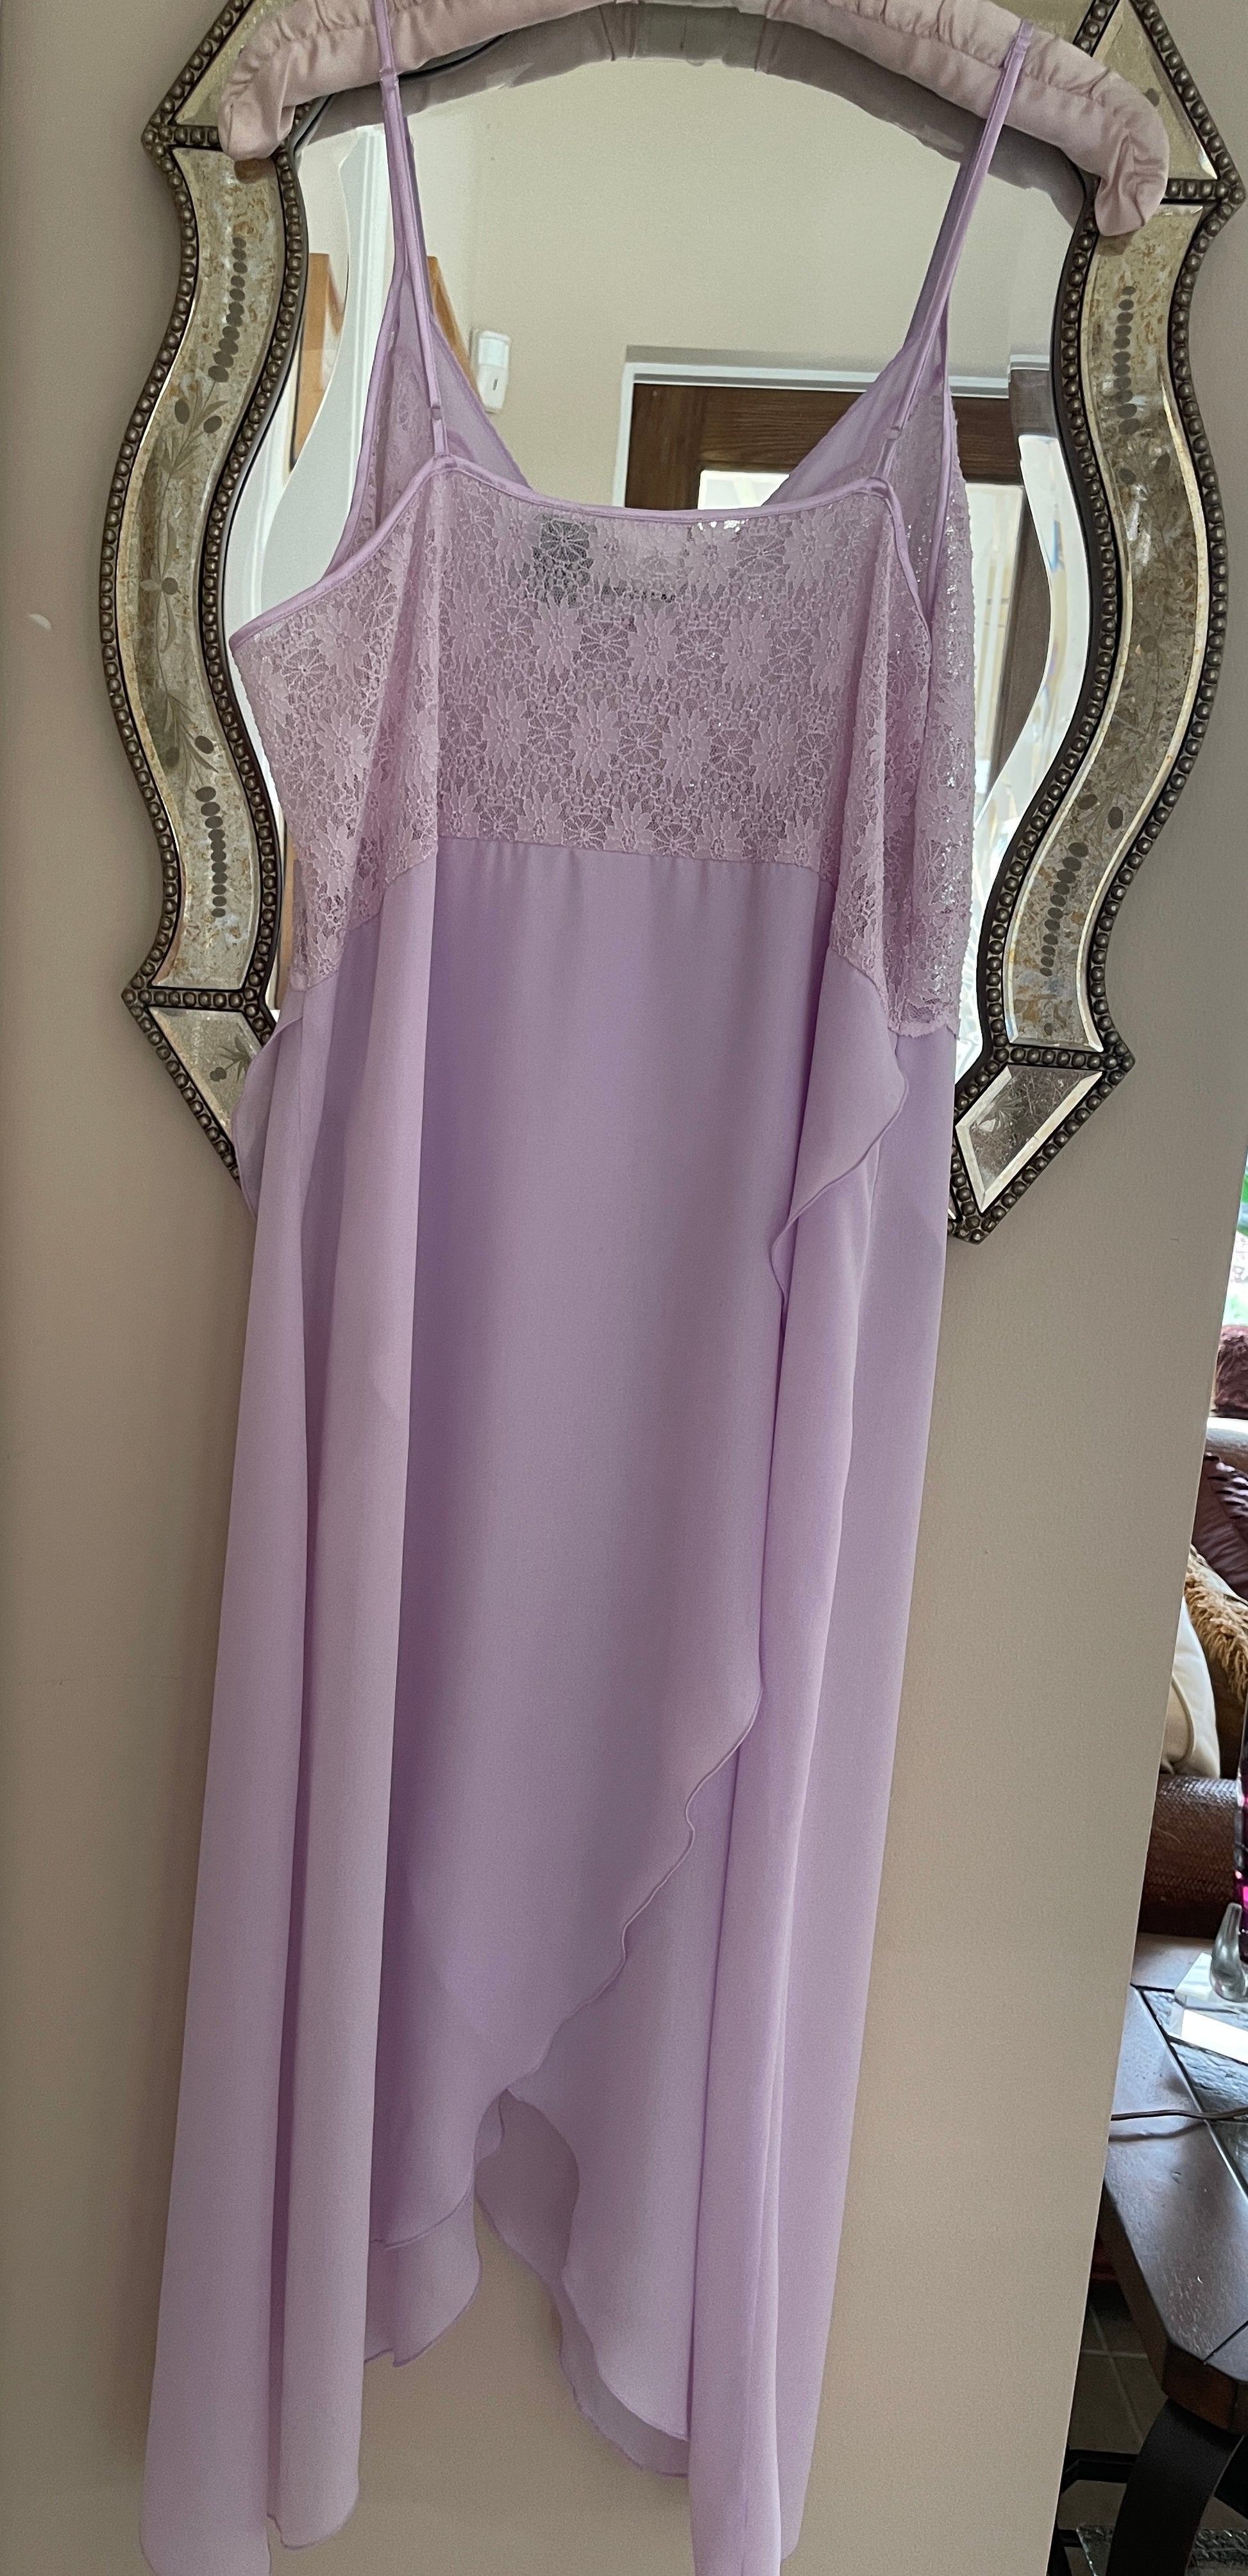  90s Sheer Lavender Lace Lingerie Gown Lg